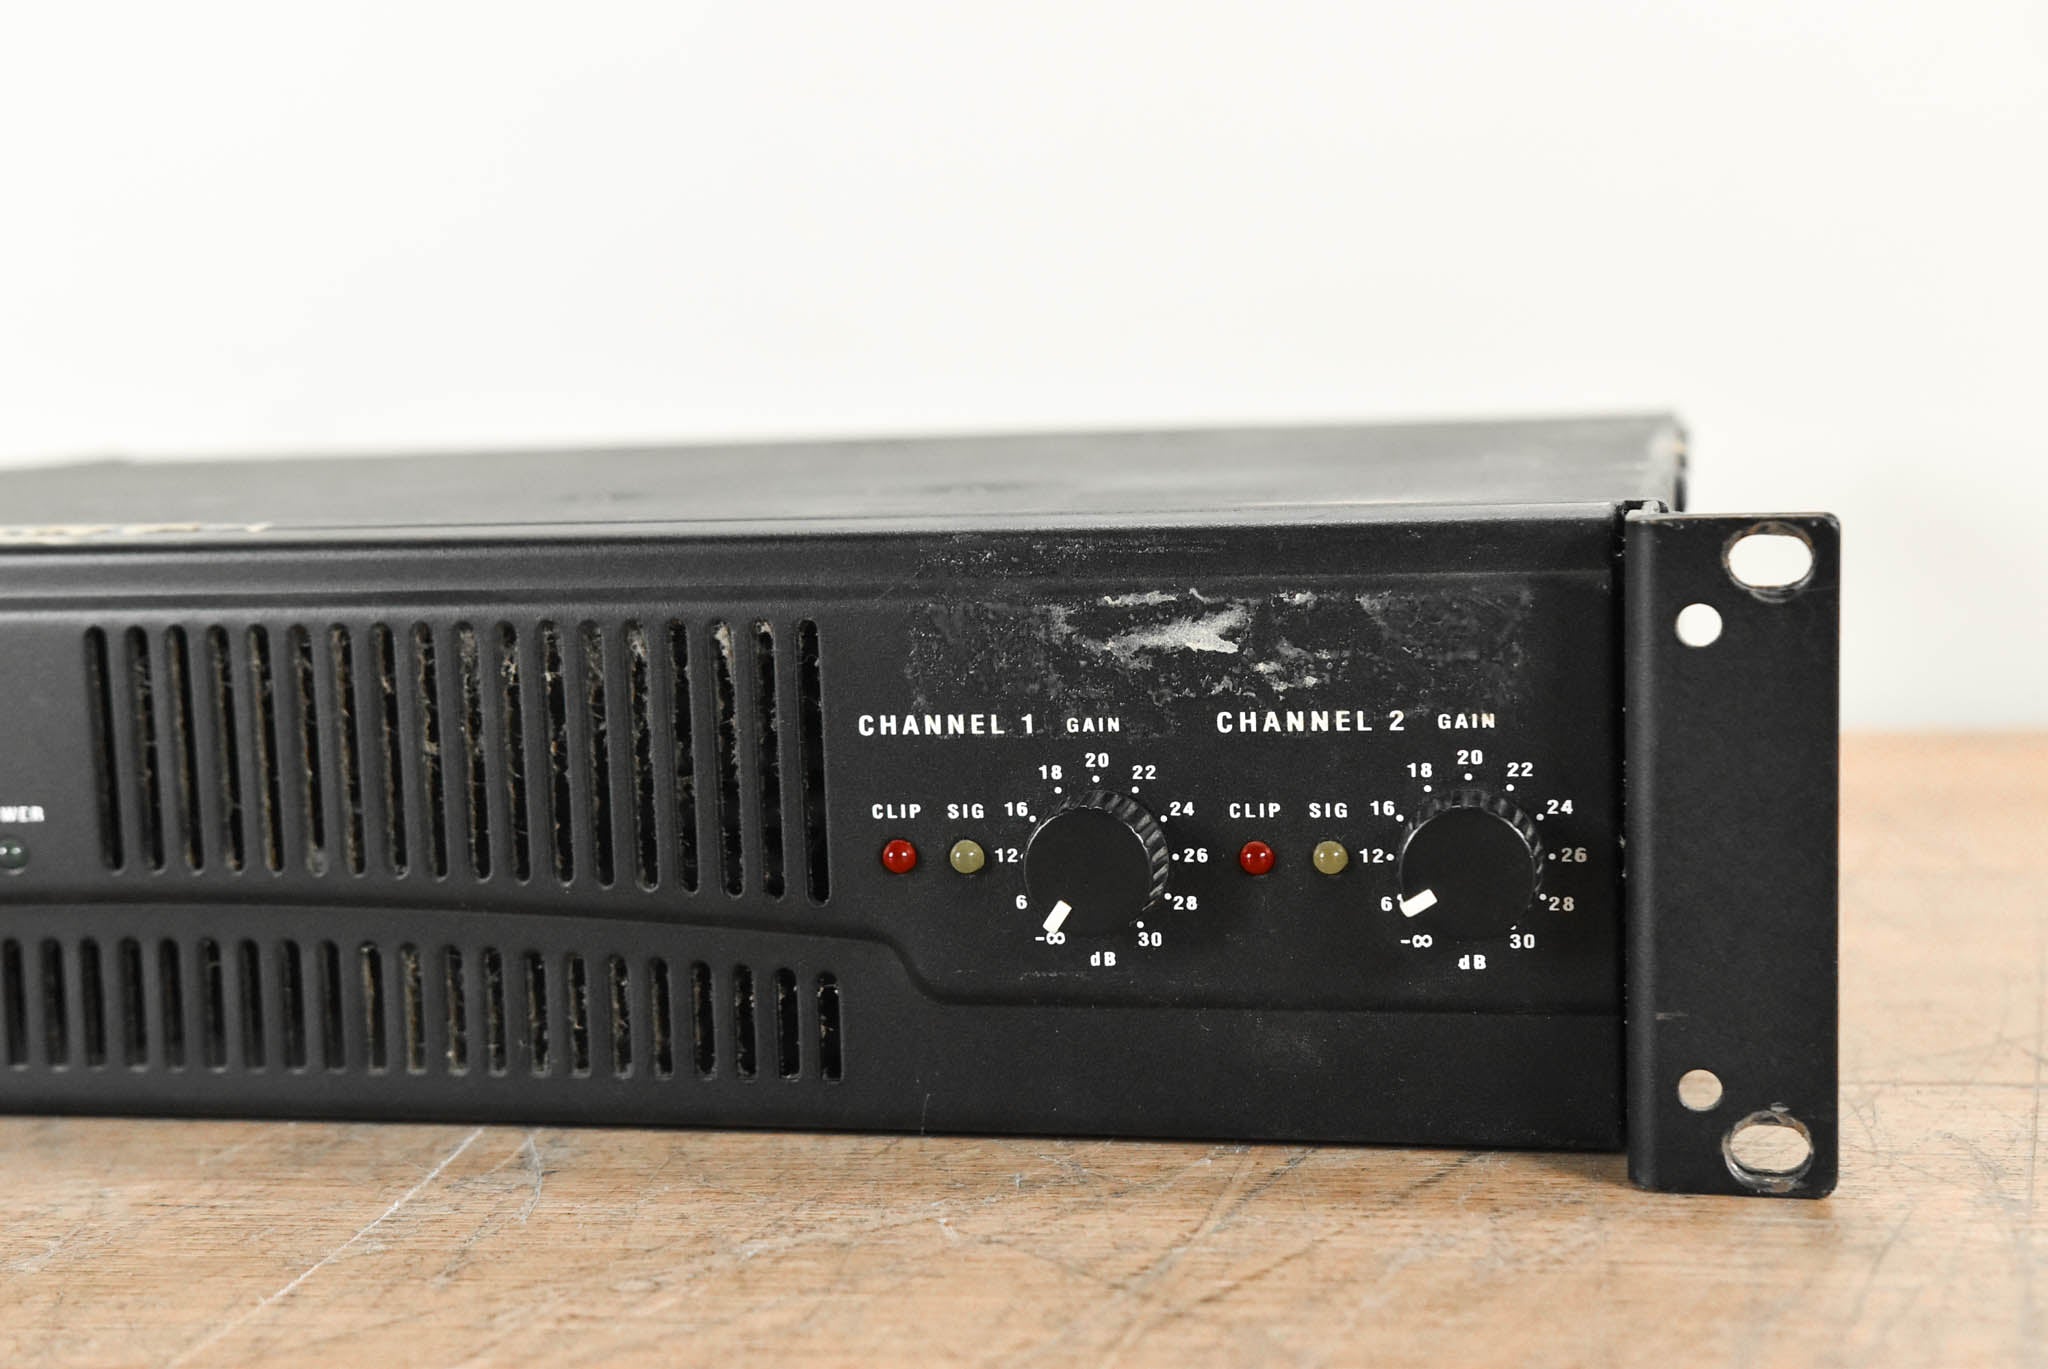 QSC RMX850 2-Channel Power Amplifier